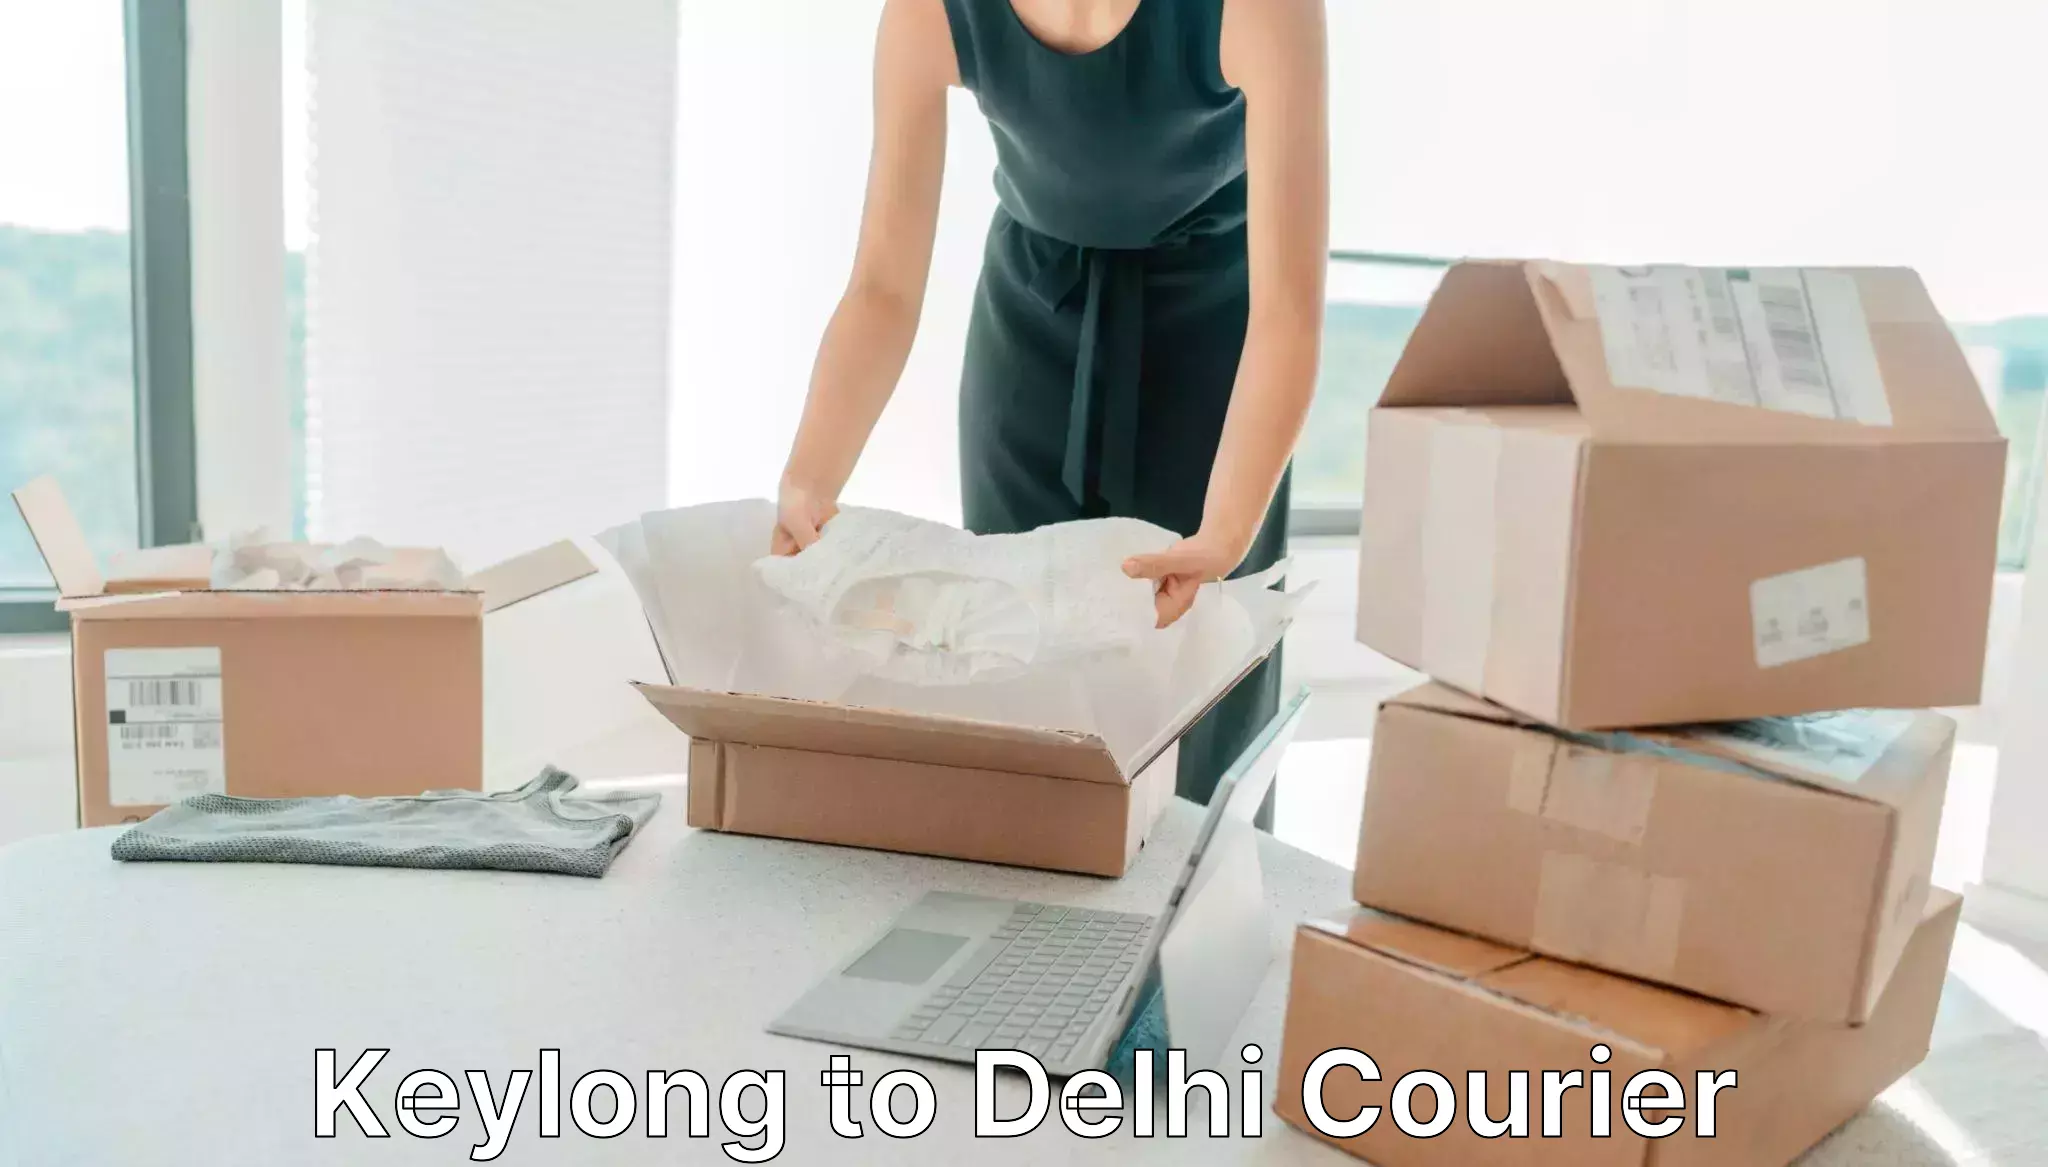 Customer-focused courier in Keylong to Delhi